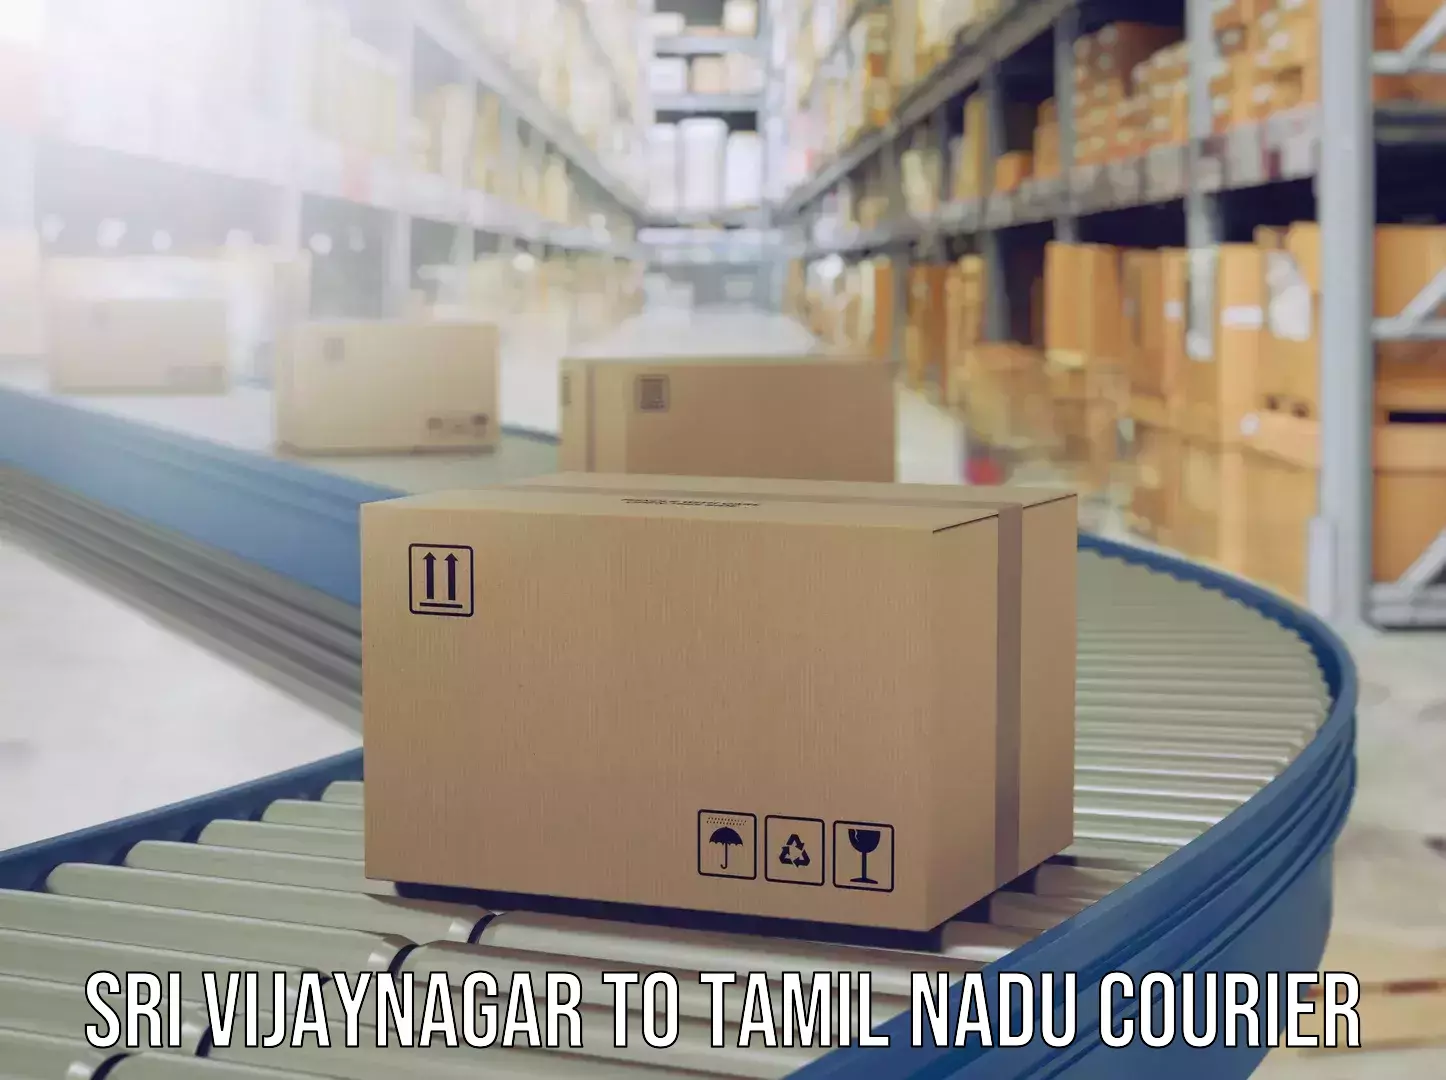 Luggage shipment specialists Sri Vijaynagar to Tirunelveli